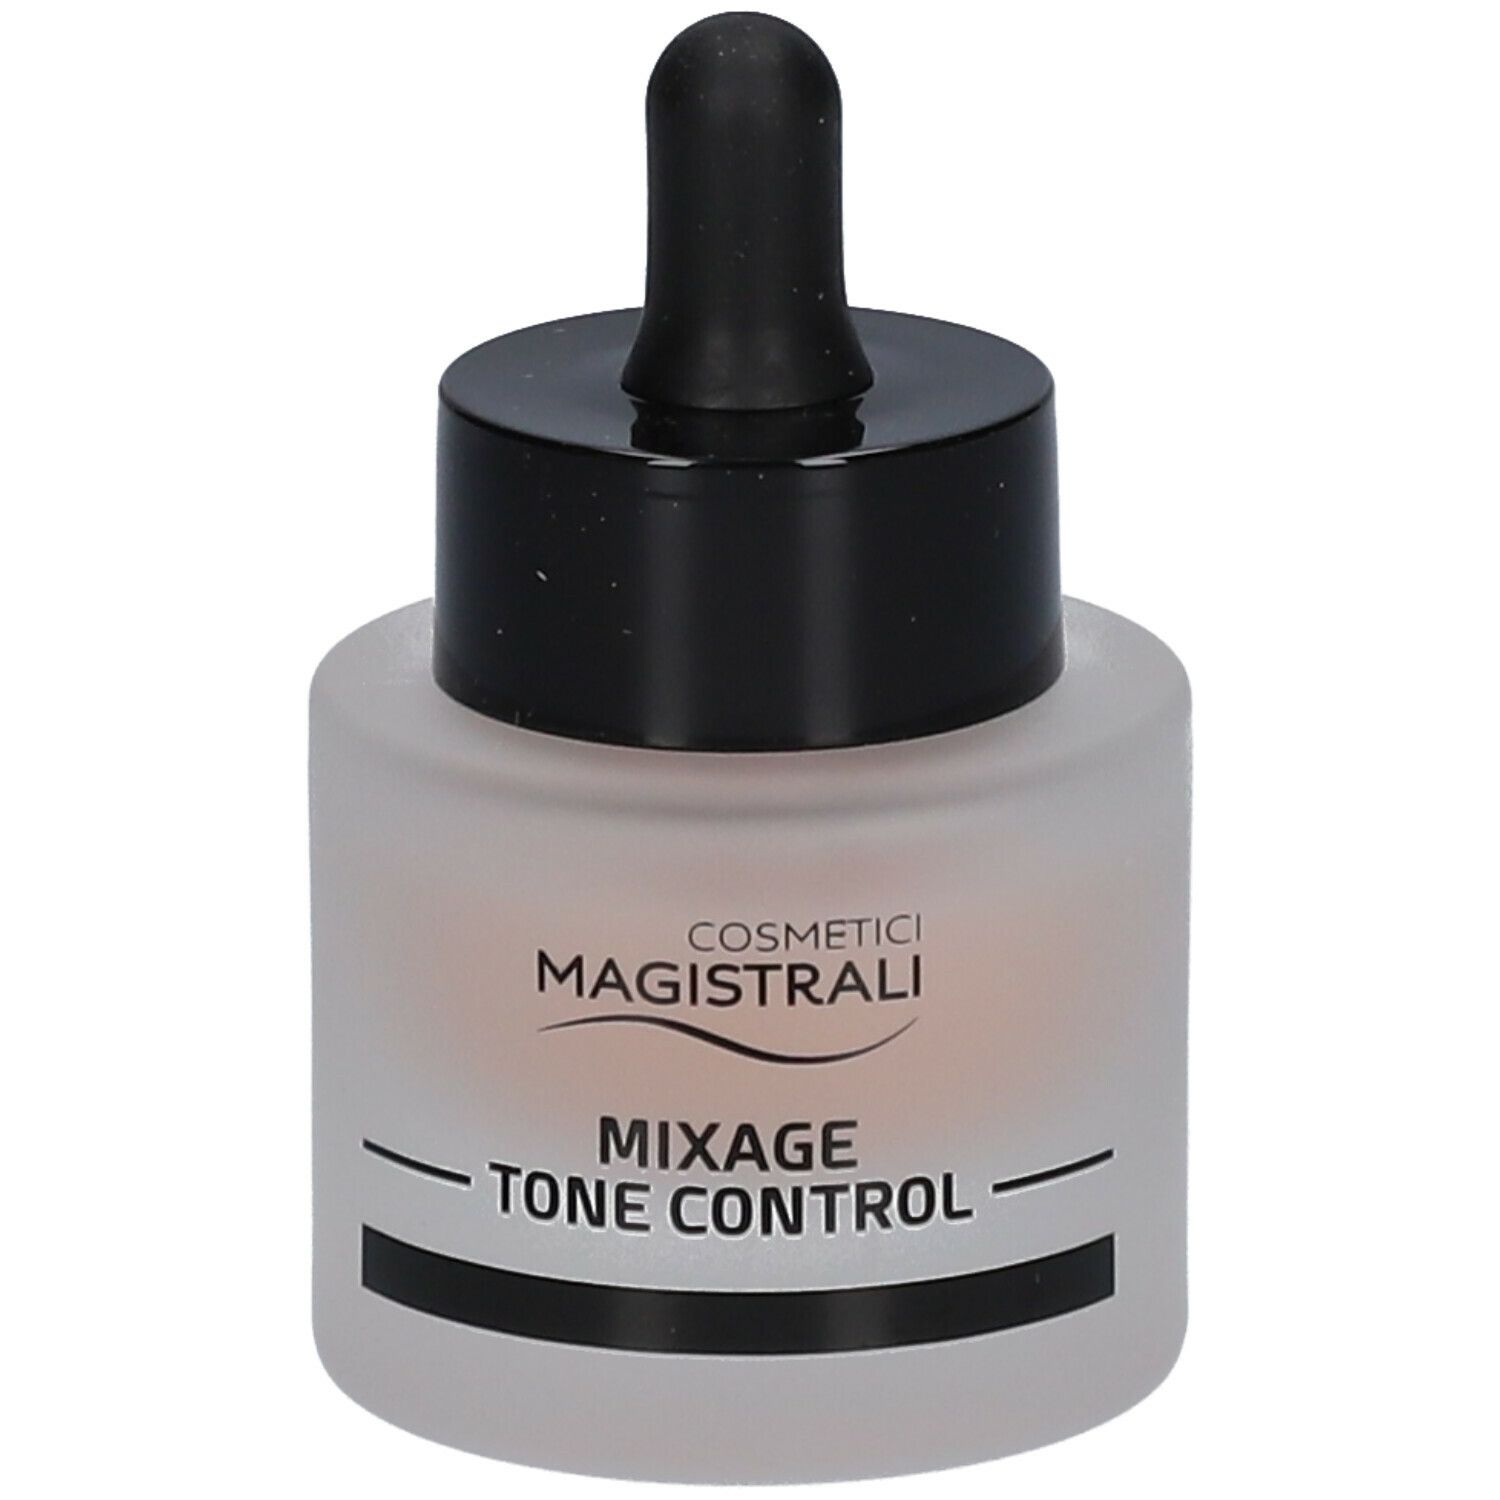 Cosmetici Magistrali Mixage Tone Control 15Ml